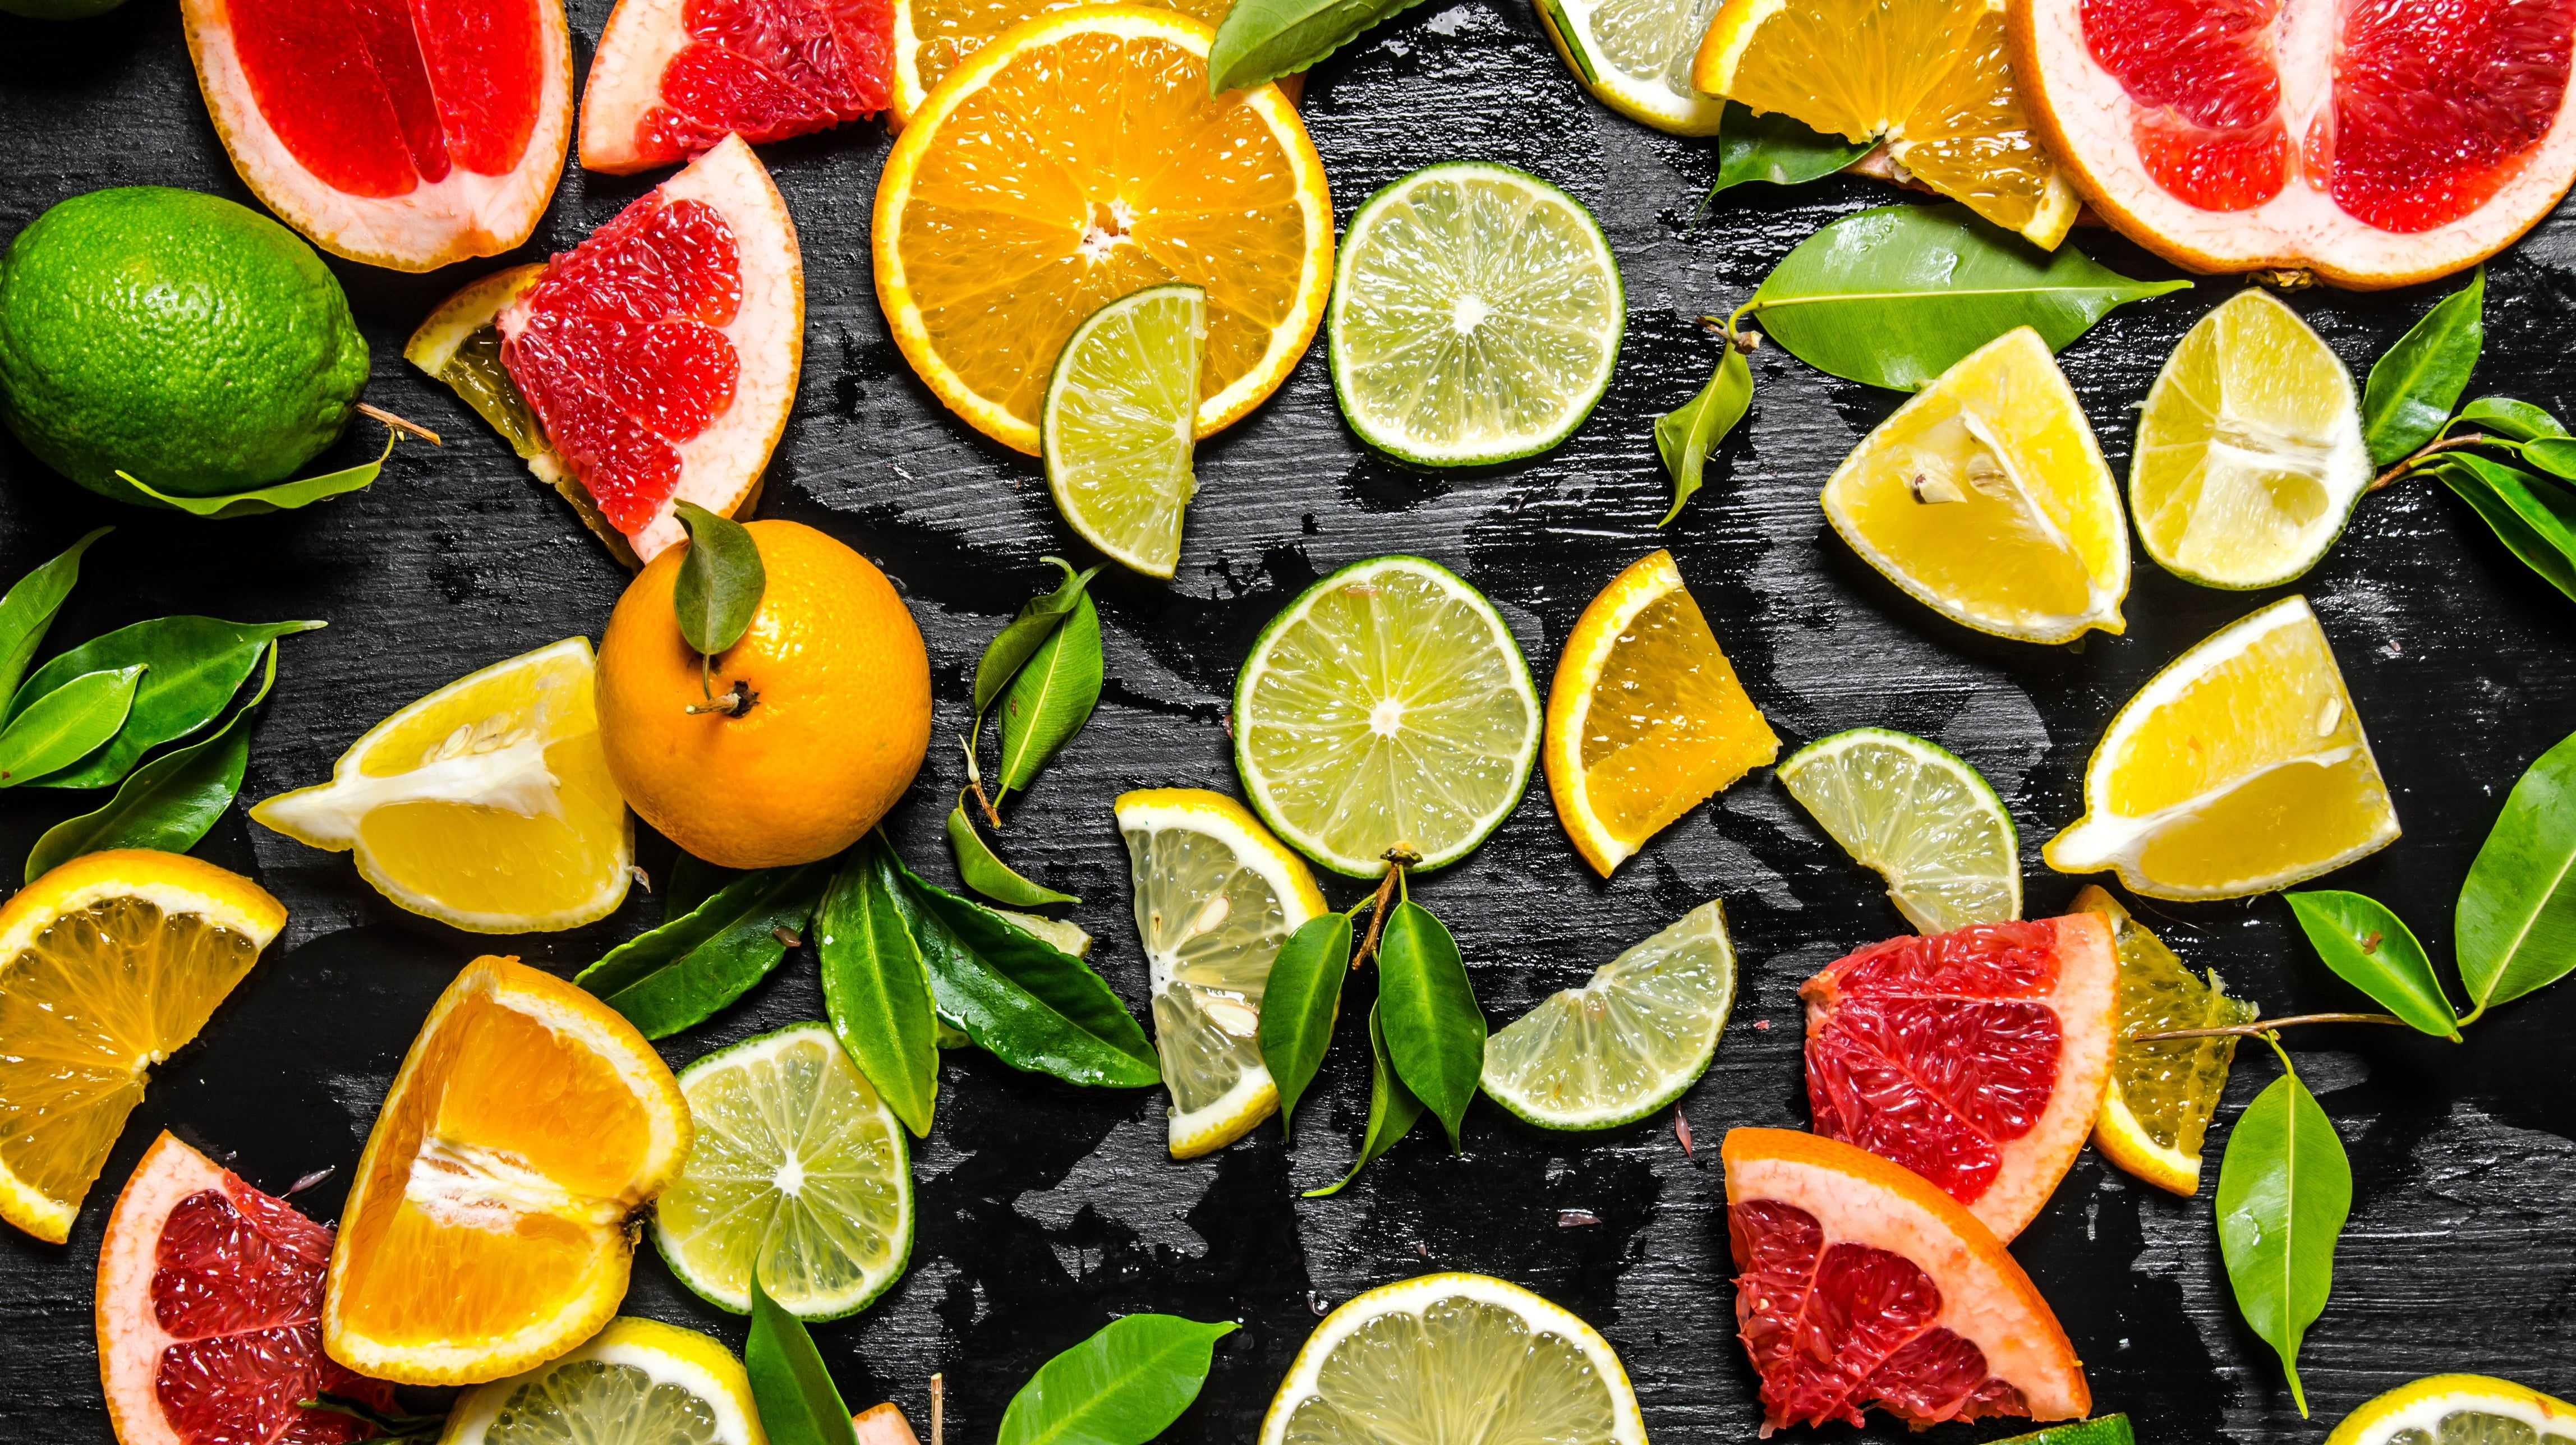 variety of sliced fruits #background #orange #lime #fruit #citrus #lemons #slices #Mandarin the grapefruit K #wallpaper #hdwallpaper #deskt. Fruit, Citrus, Food